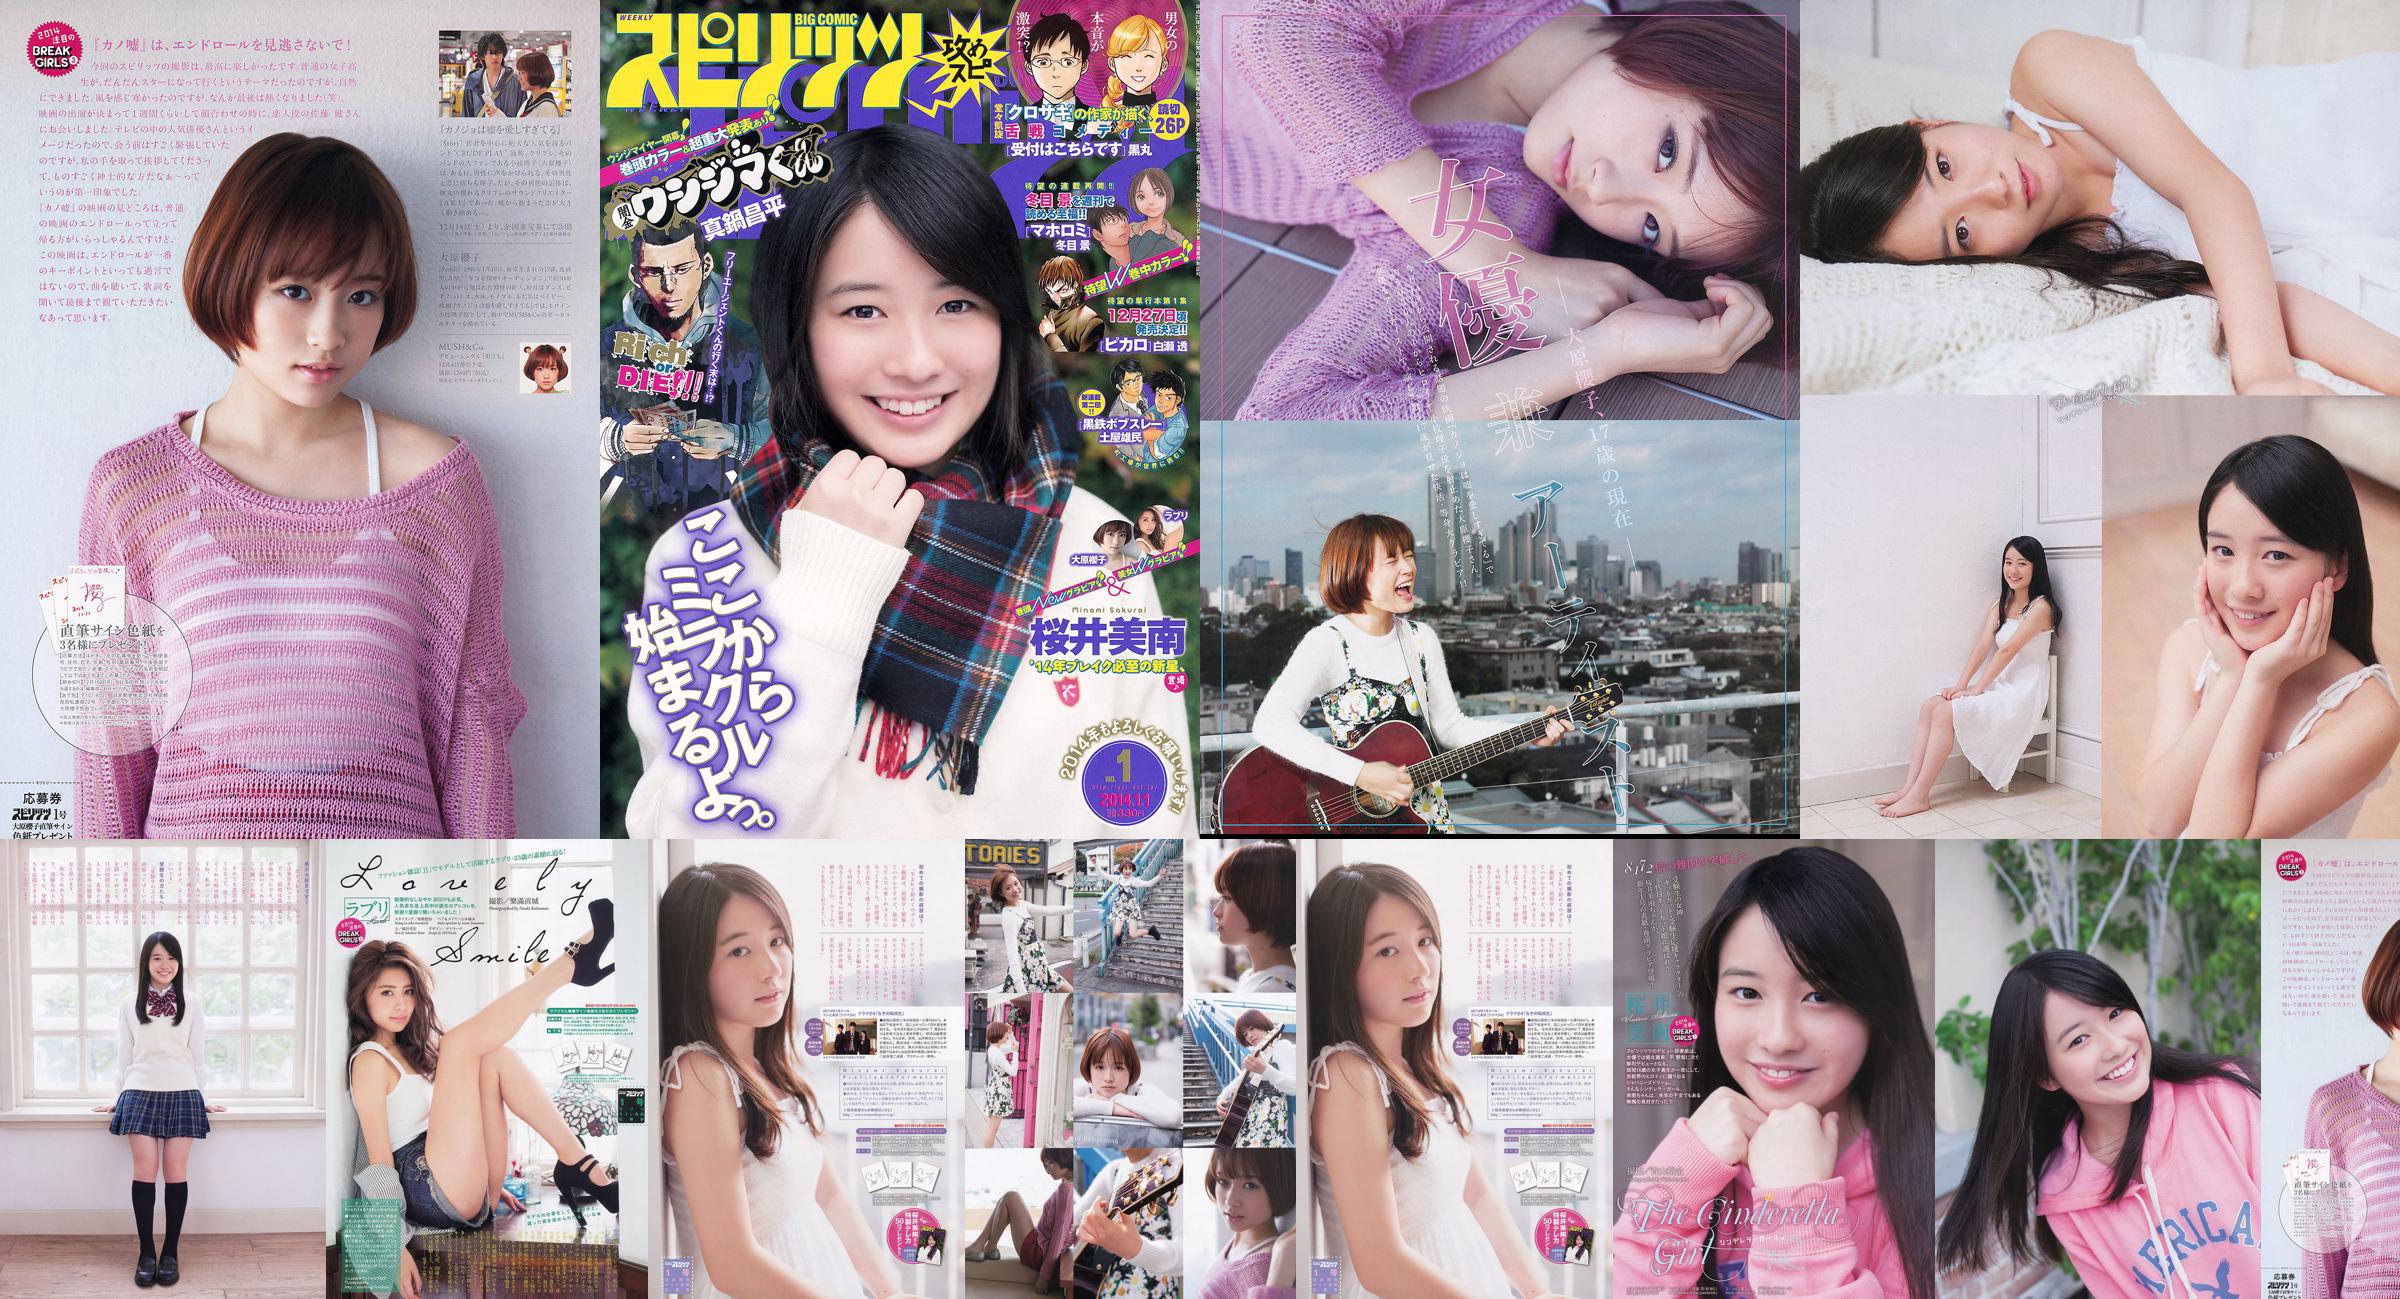 [Grands esprits de la bande dessinée hebdomadaire] Sakurai Minan Ohara Sakurako 2014 Magazine photo n ° 01 No.740841 Page 2